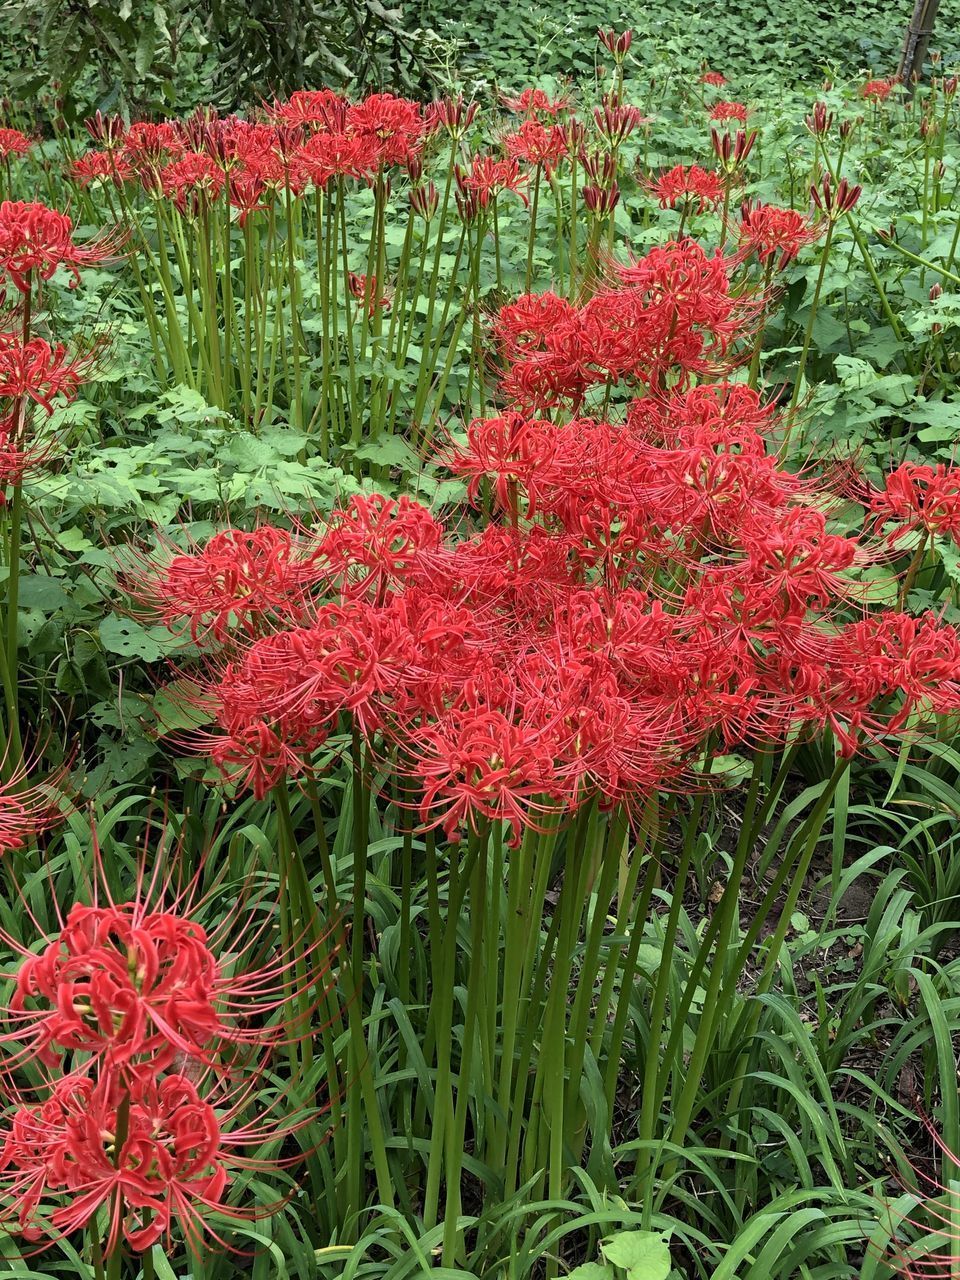 RED FLOWERING PLANTS ON FIELD